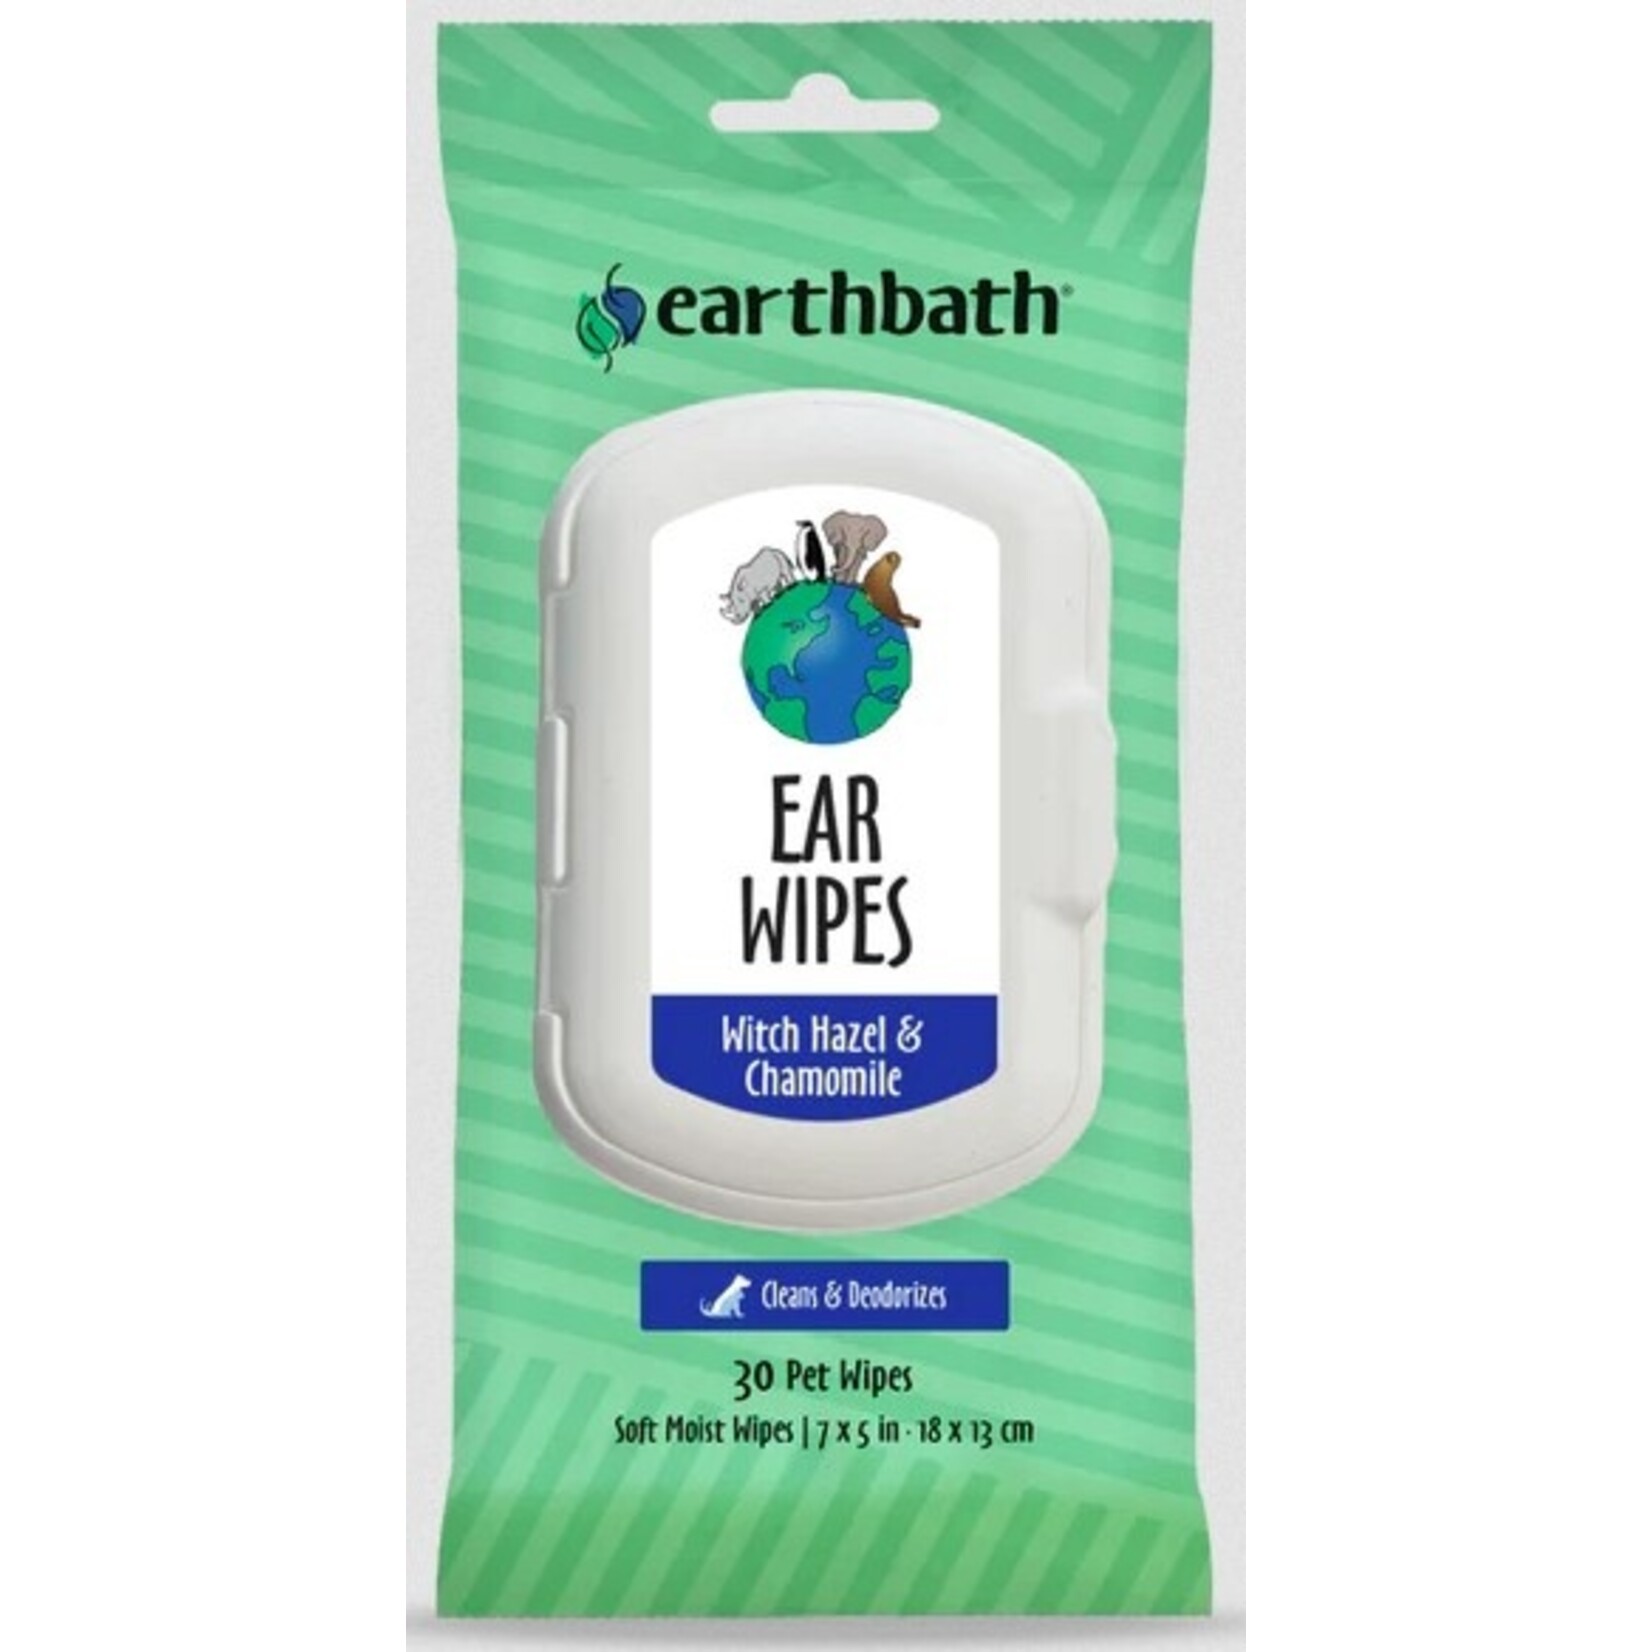 Earthbath EARTHBATH Ear Wipes Witch Hazel & Chamomile 30ct